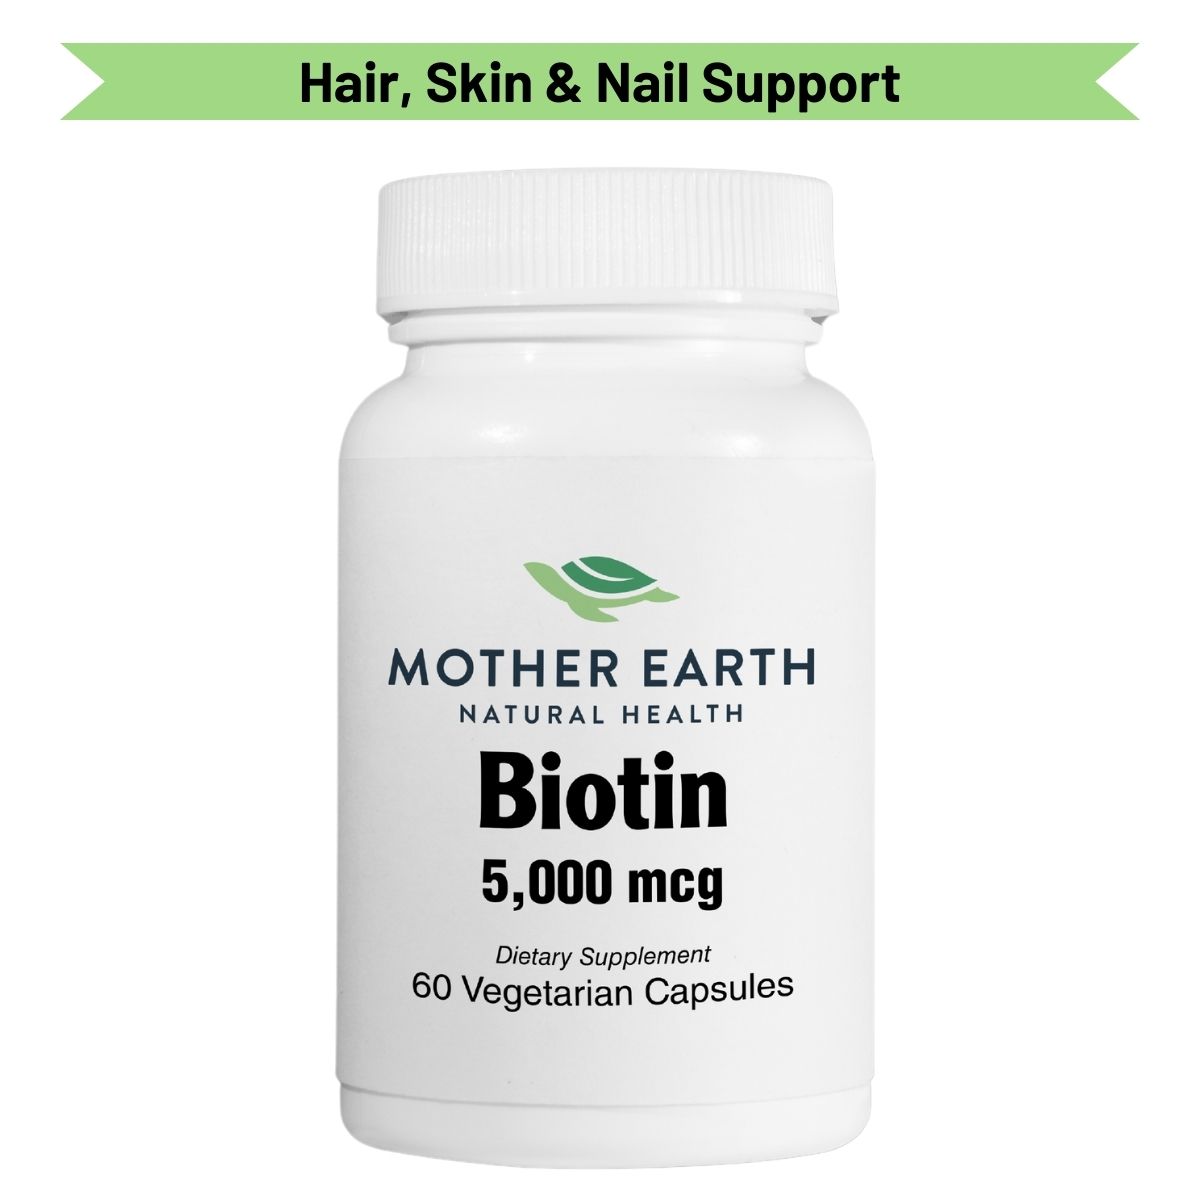 Mother Earth Biotin